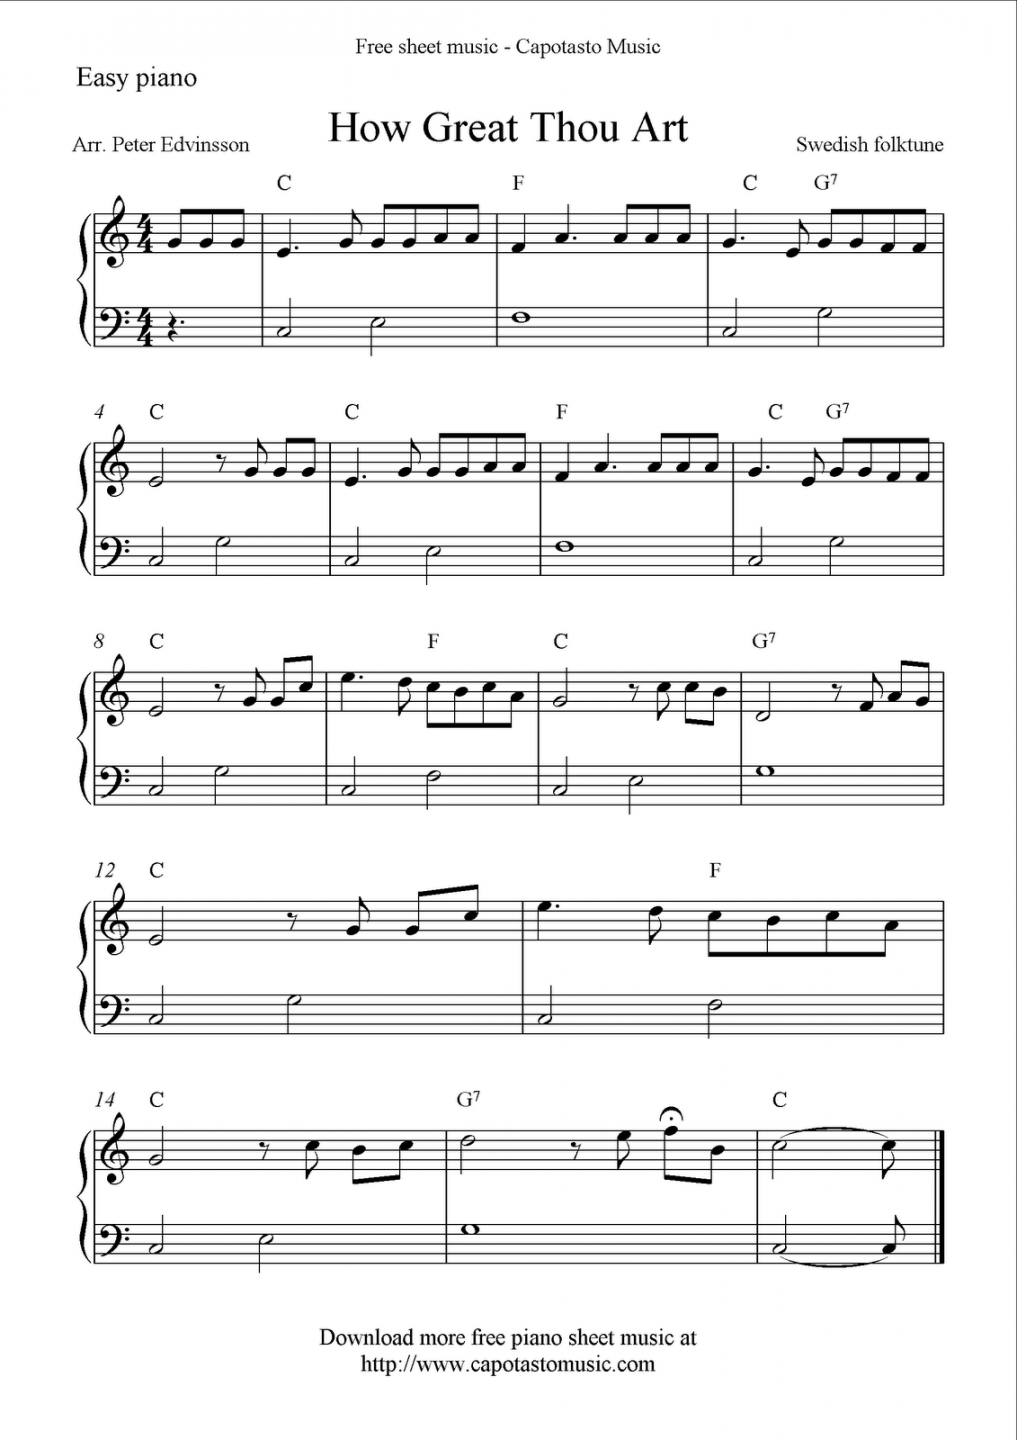 Free Sheet Music Printable - Printable - Free easy piano sheet music, How Great Thou Art  Piano sheet